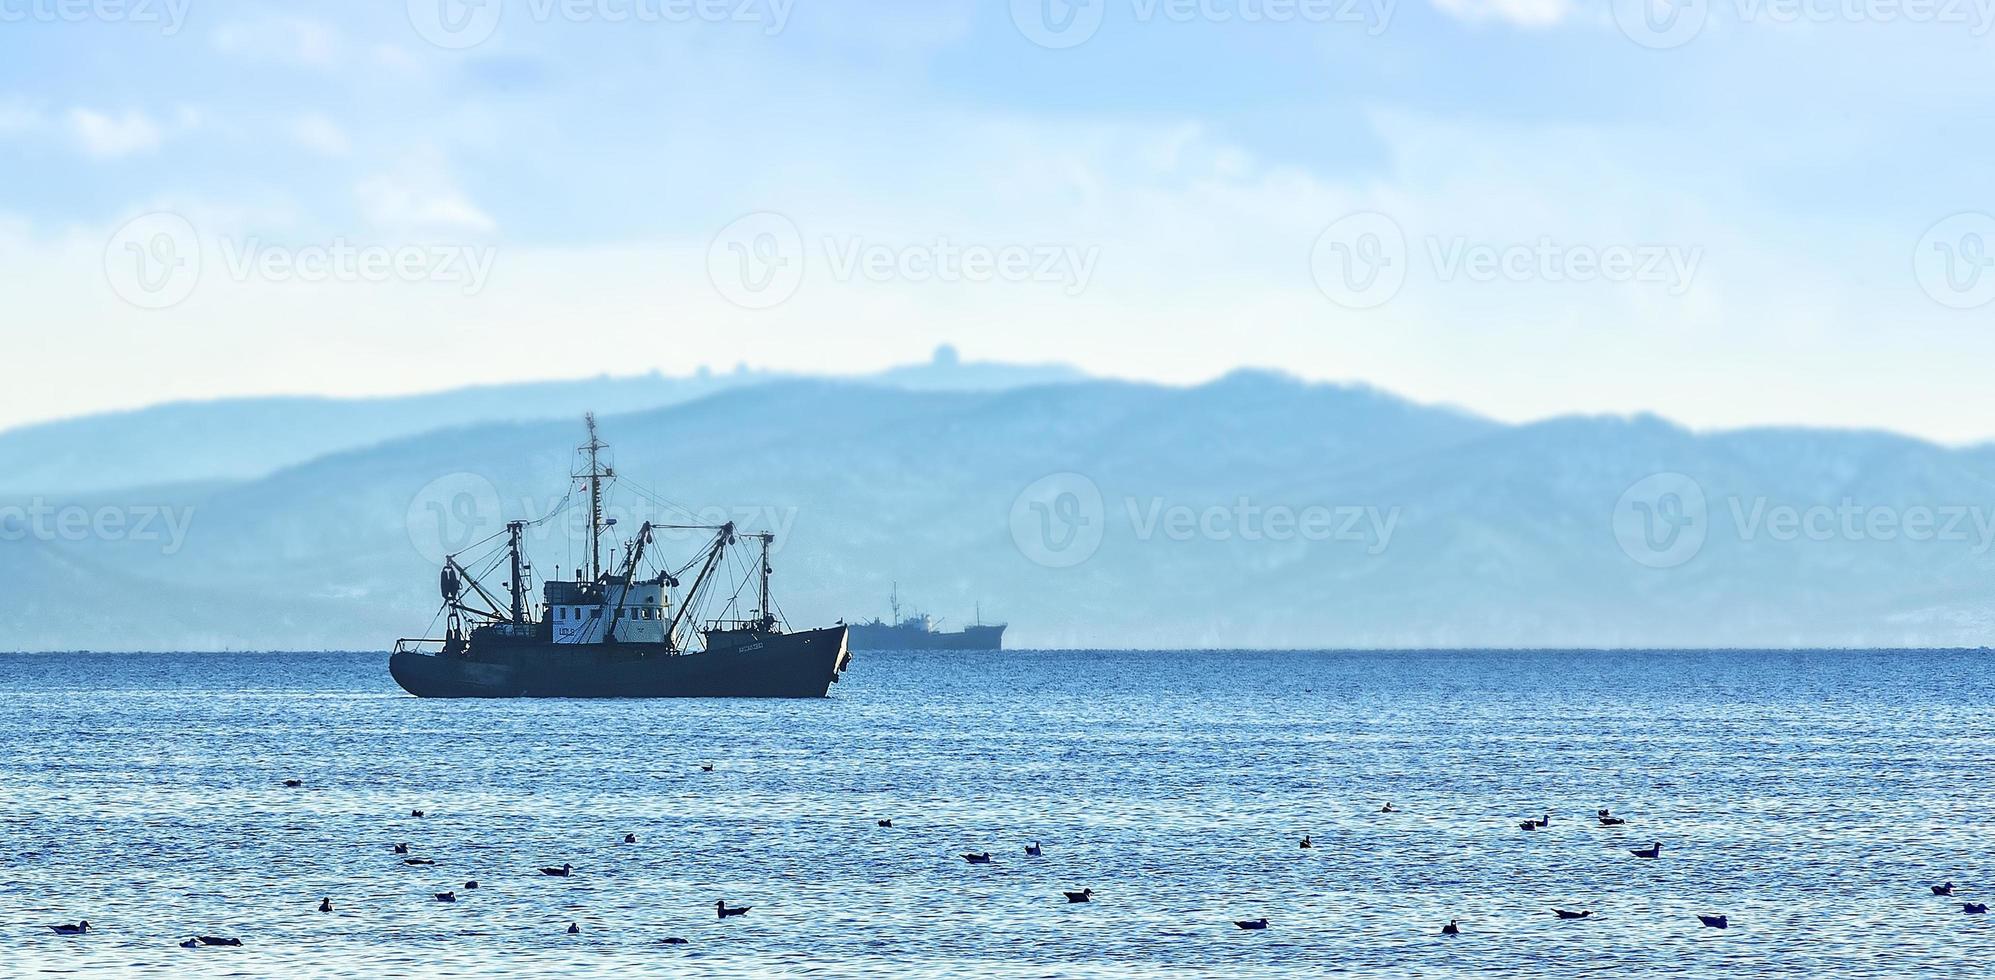 barco de pesca na manhã cinzenta no oceano pacífico ao largo da costa da península de kamchatka foto